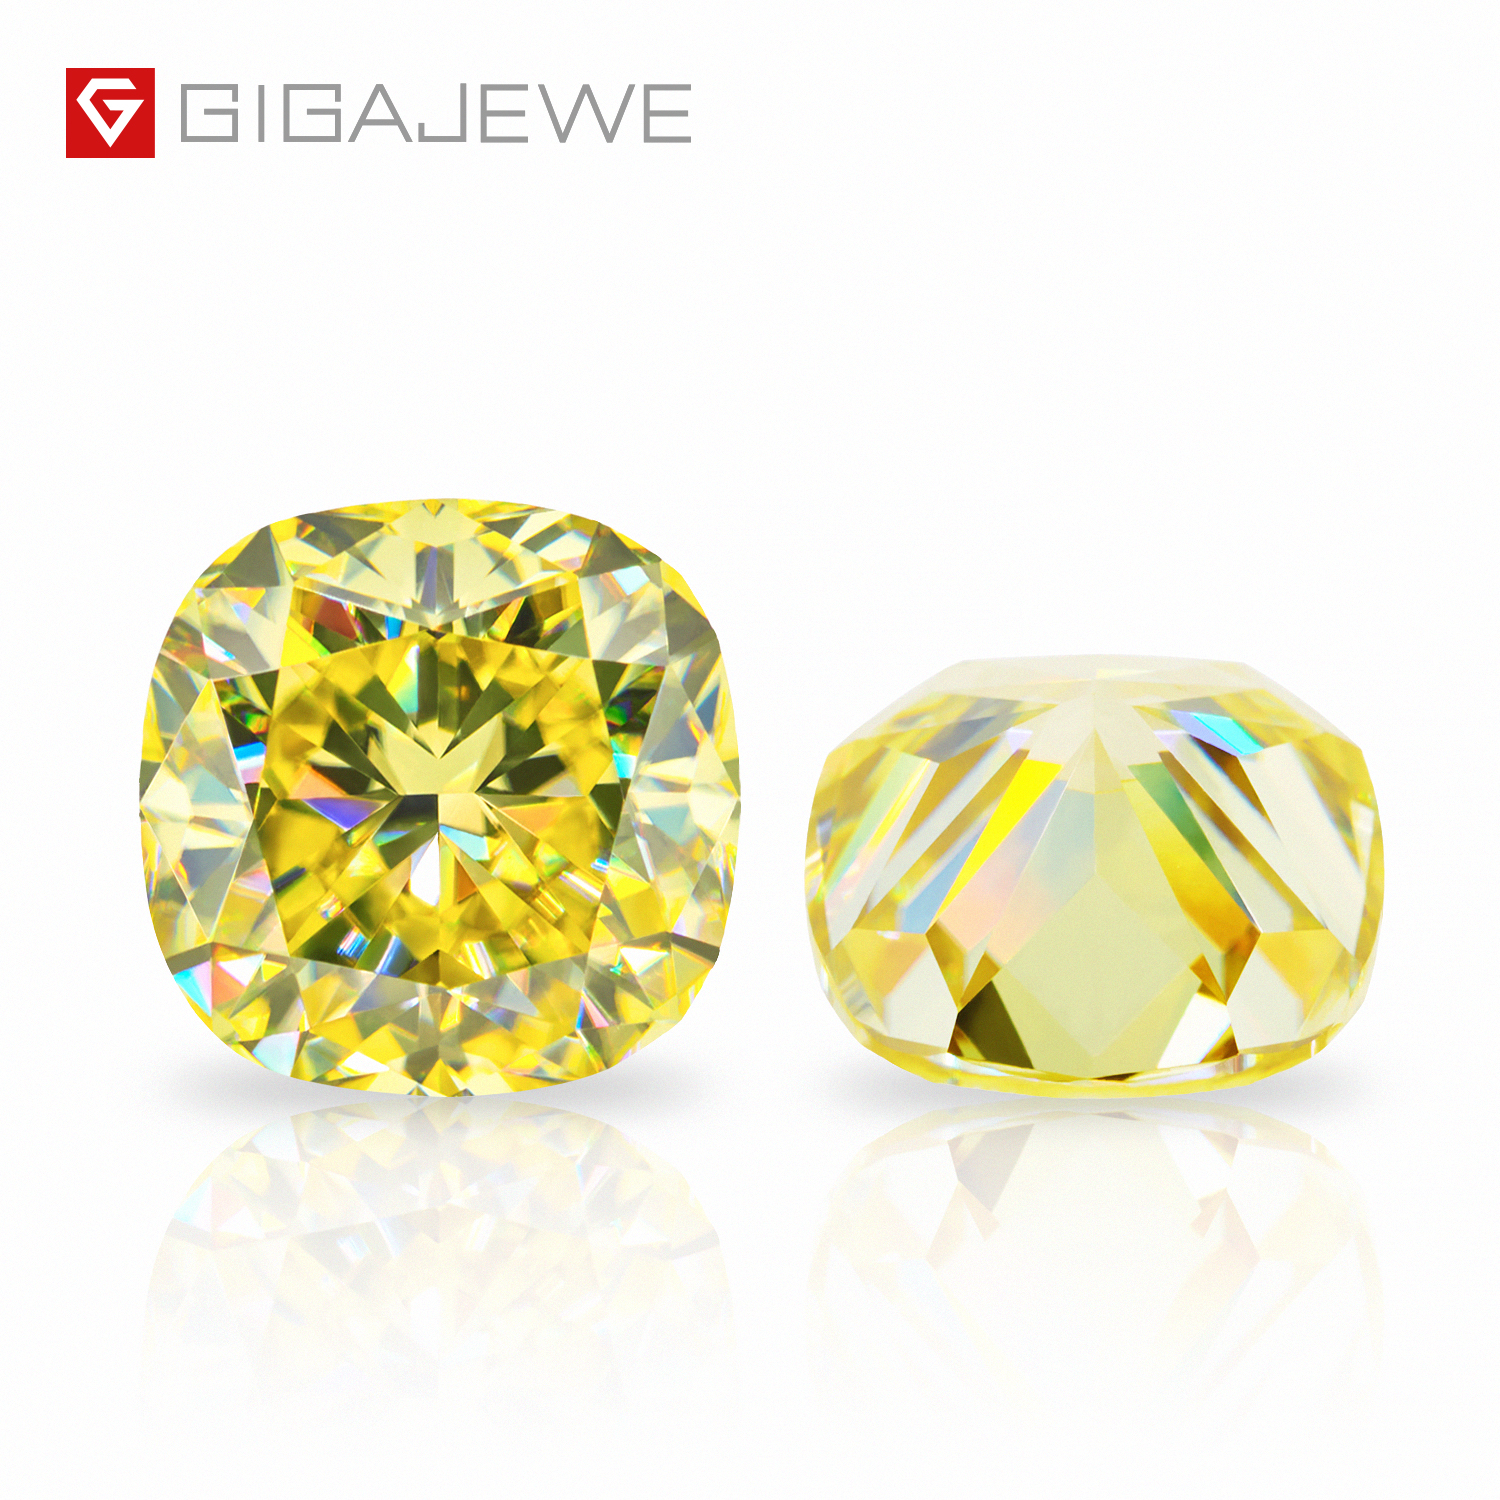 GIGAJEWE 定制碎冰垫切割鲜艳黄色 VVS1 莫桑石裸钻测试通过宝石用于珠宝制作